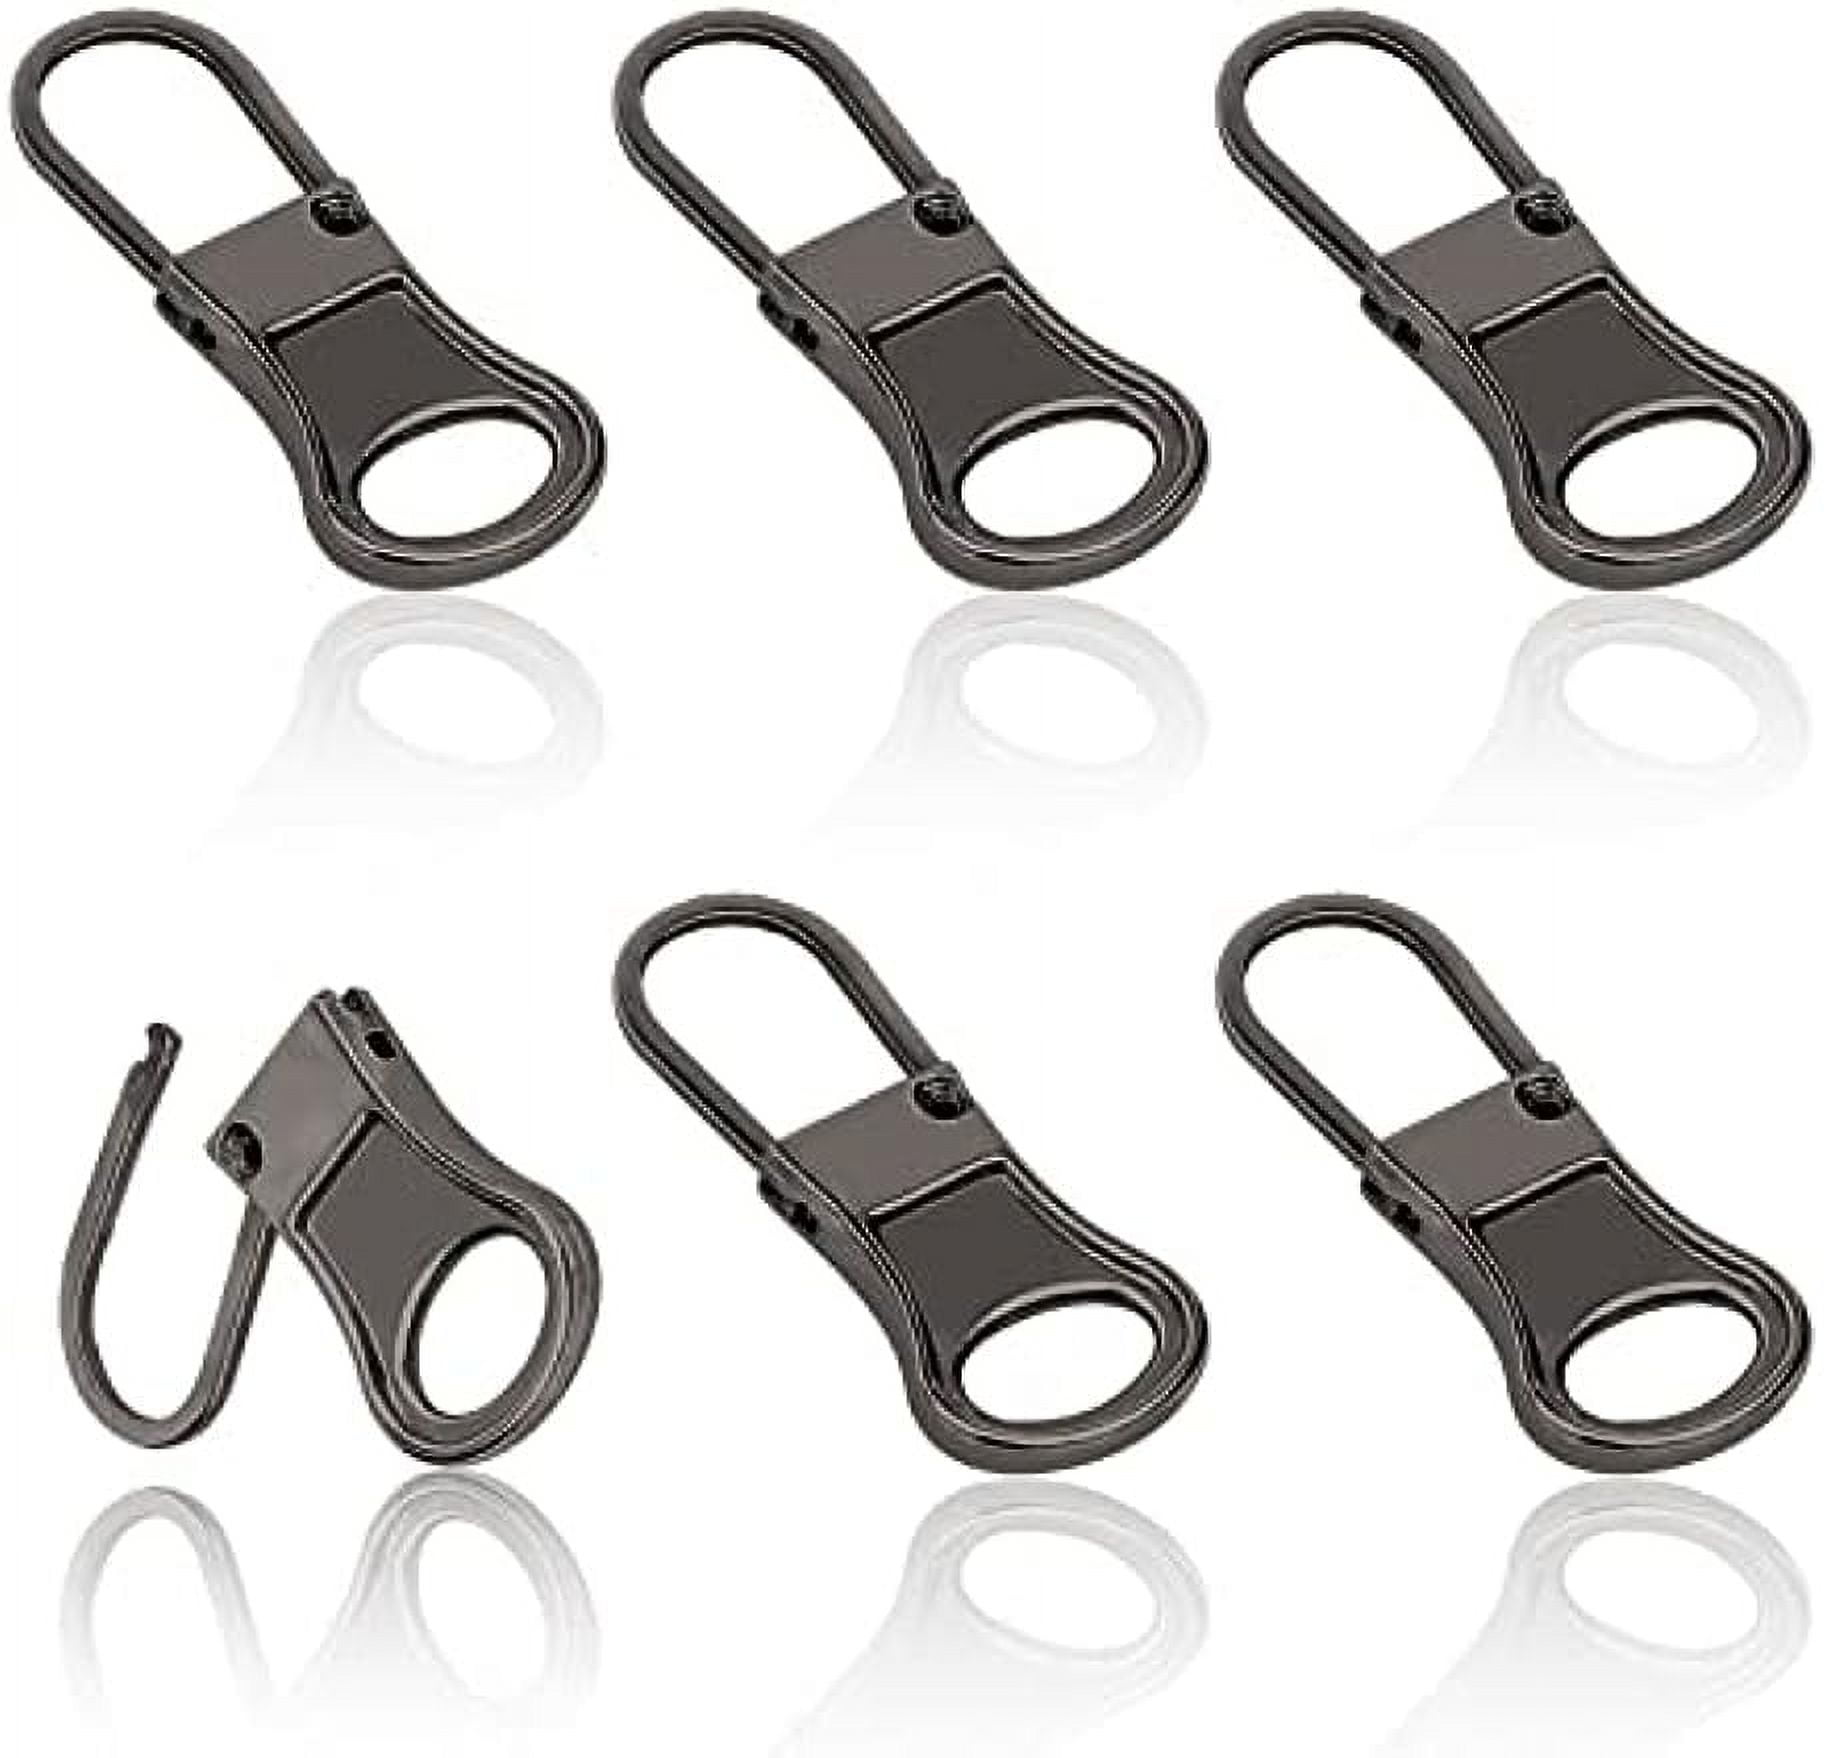  Zipper Pull Replacement Kit 14 Pcs Detachable Zipper Pull 2  Nylon Cord Universal Metal Zipper Handle Mend Fixer for Jackets, Clothing,  Luggage, Backpacks, Purses, Boots, Pants, Tents